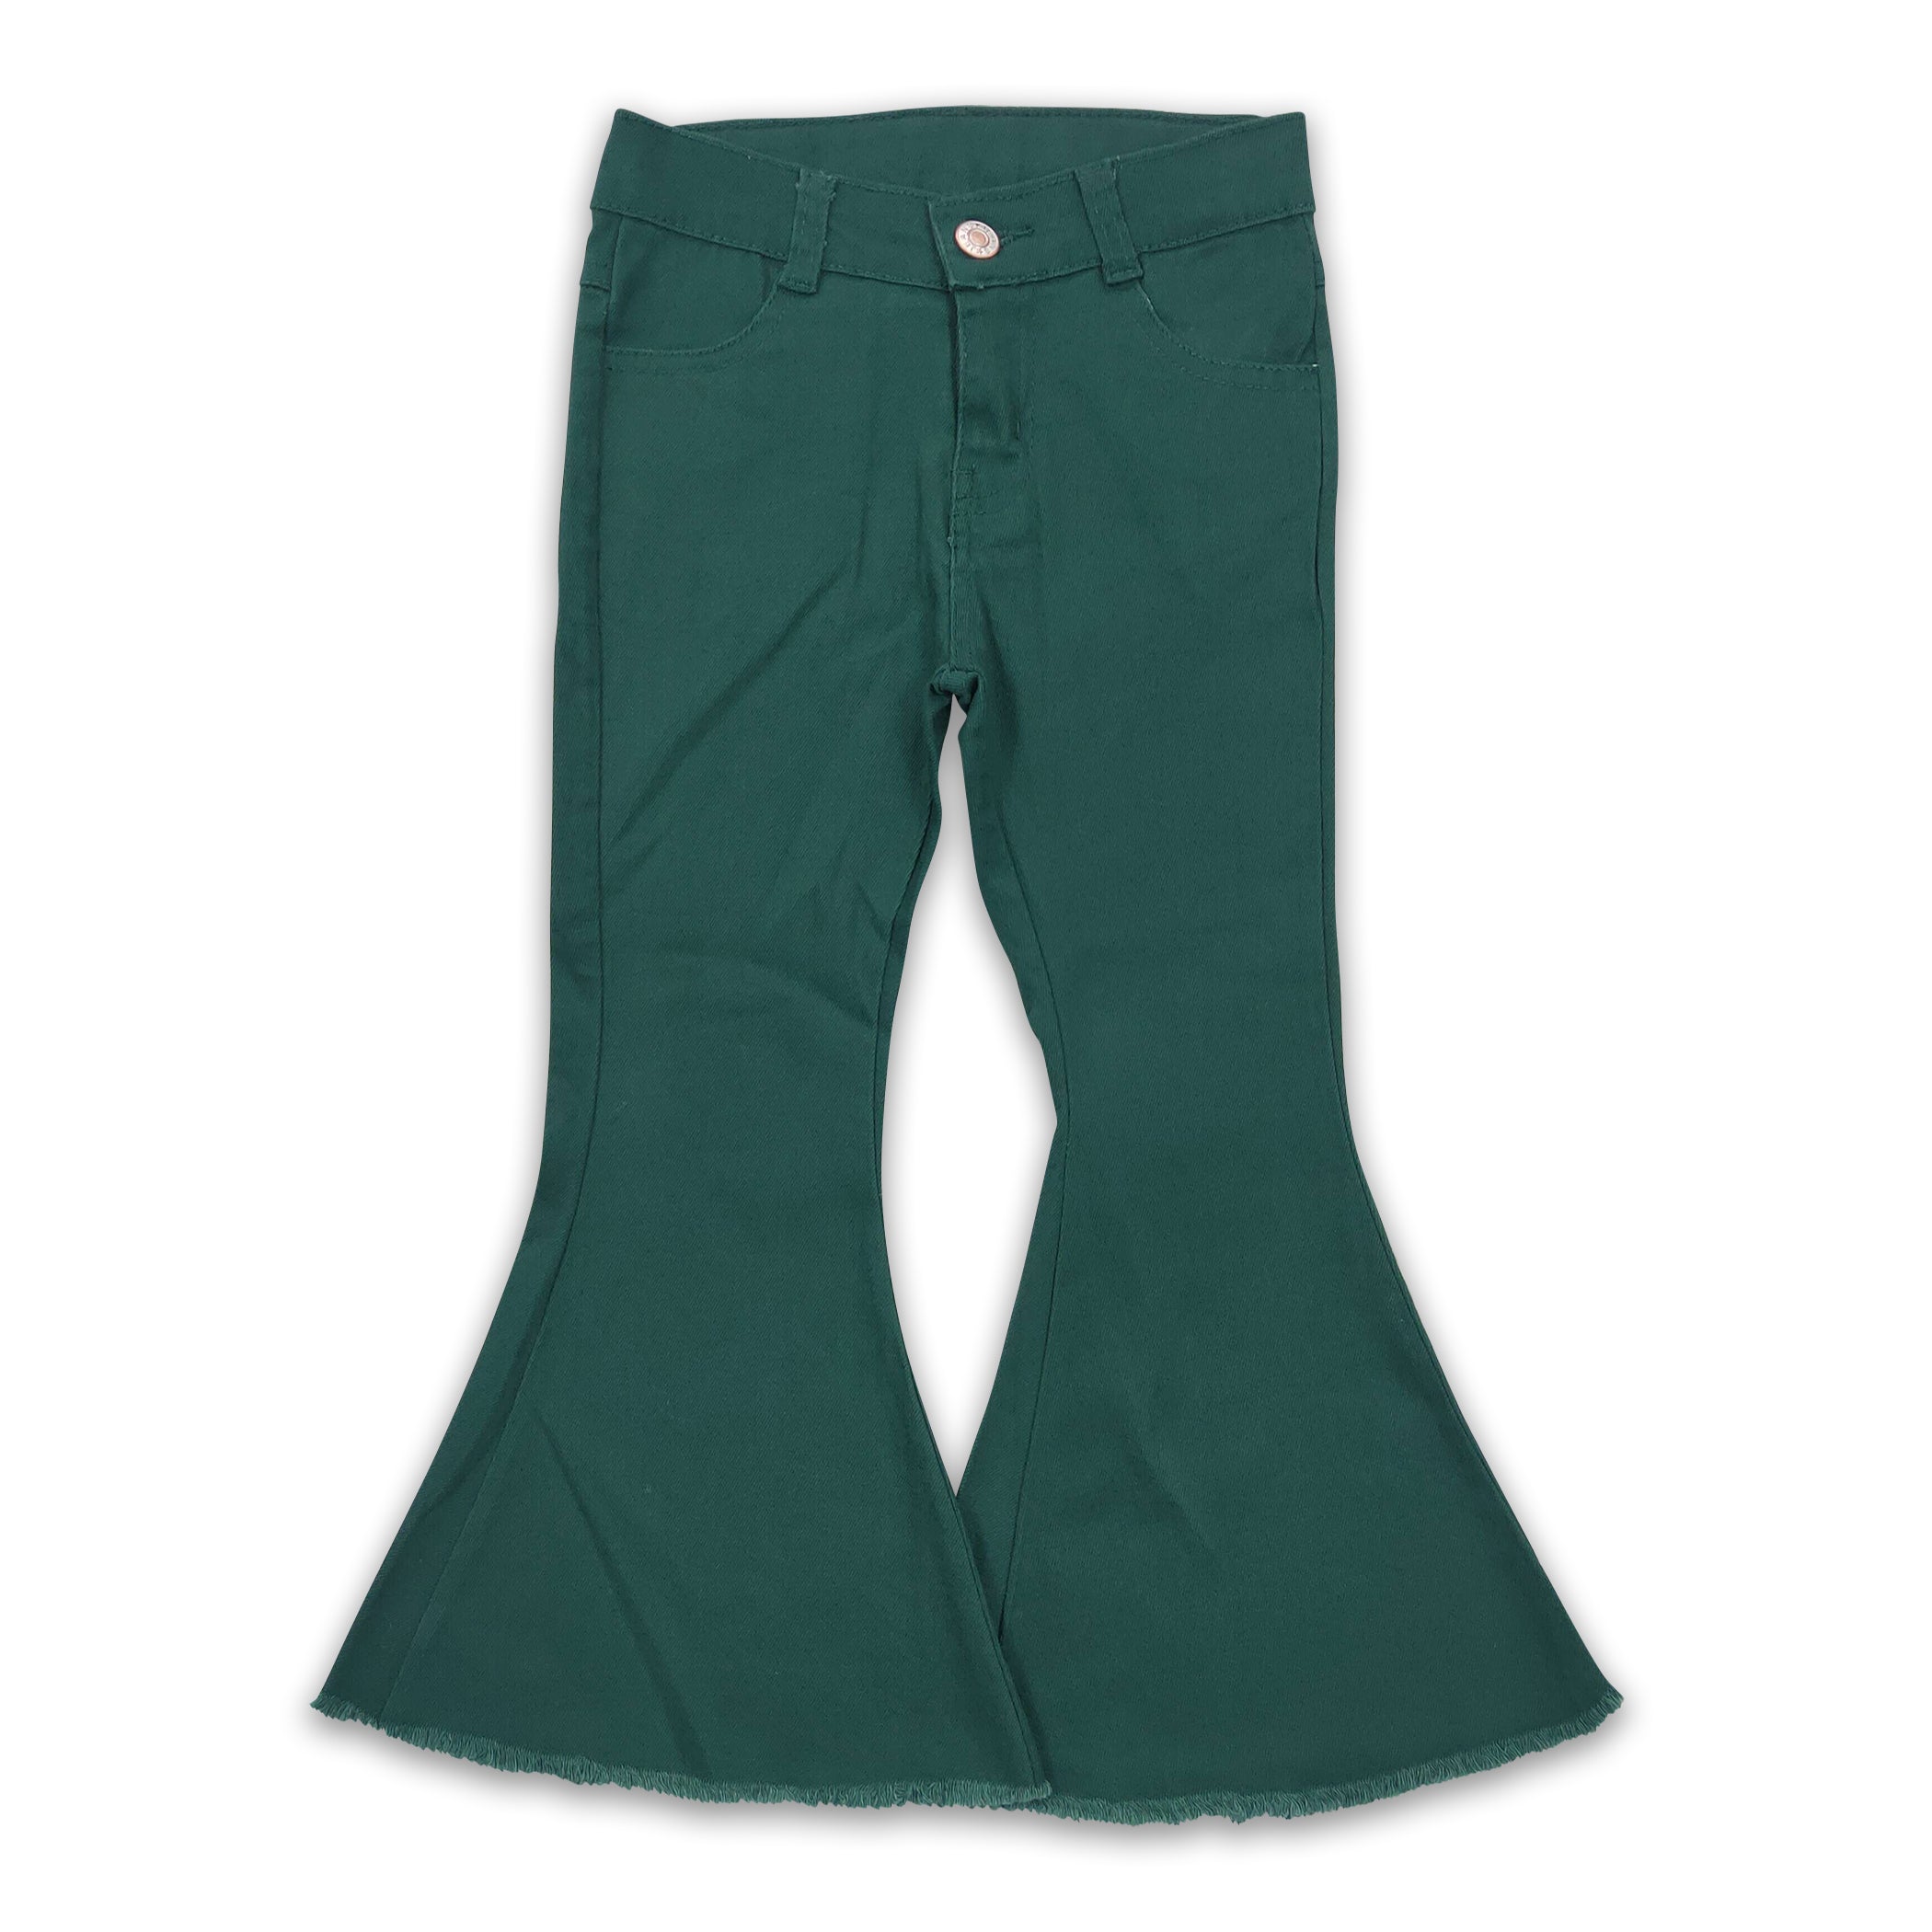 Dark green denim pants kids girls jeans – Western kids clothes